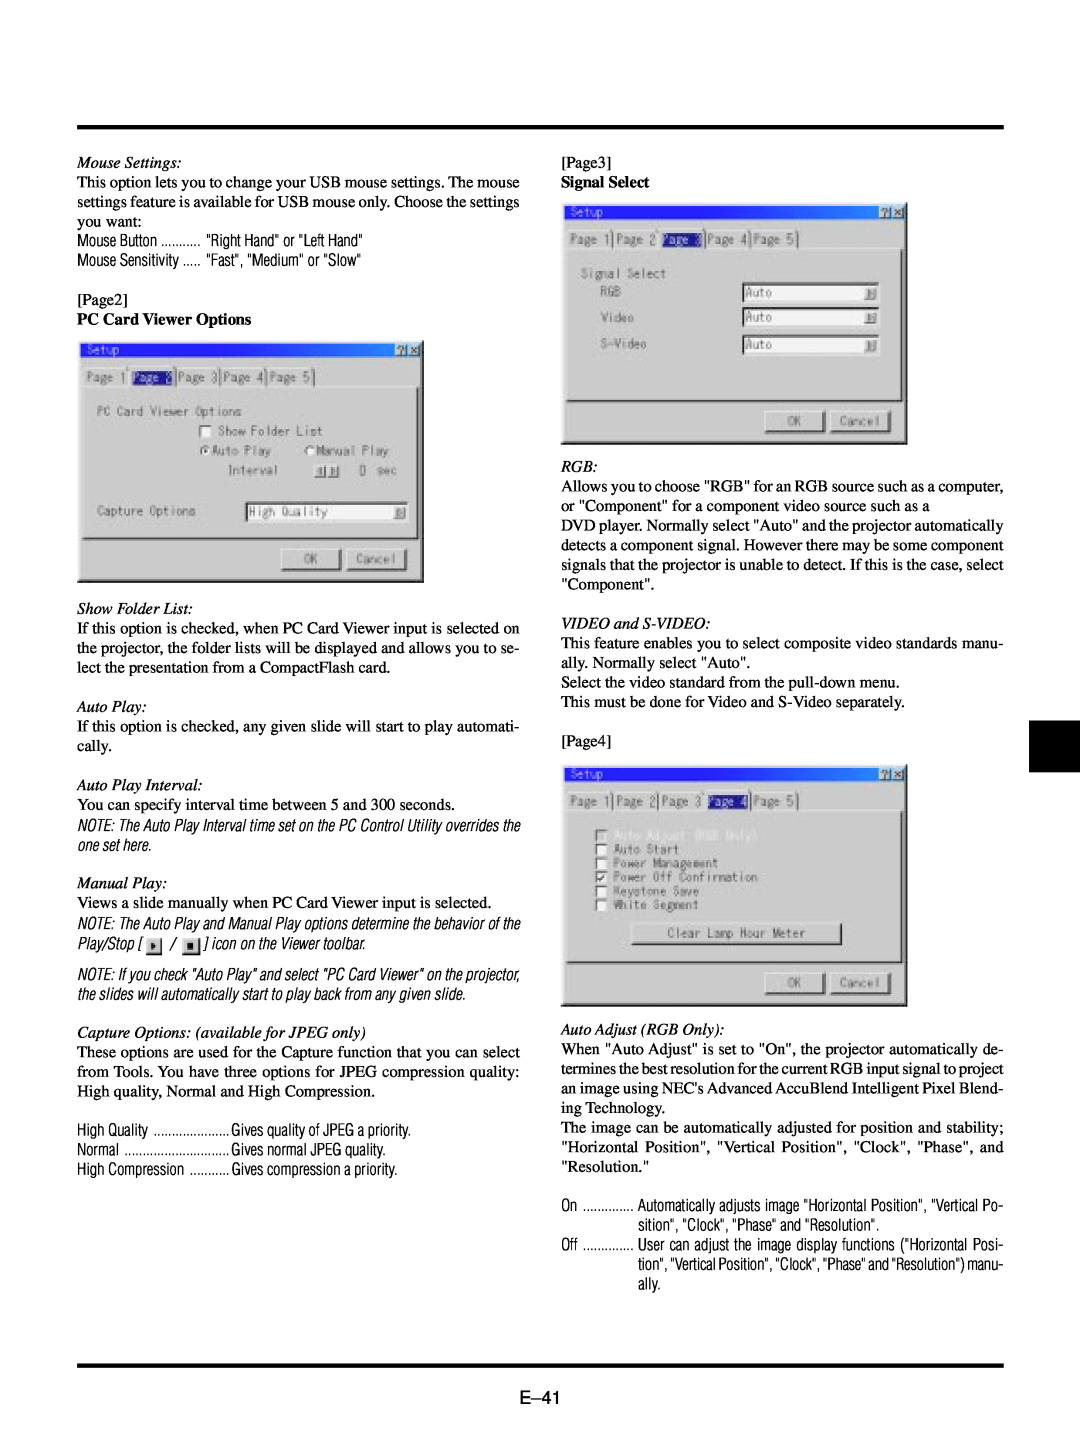 NEC LT150/LT85 user manual E–41, PC Card Viewer Options, Signal Select 